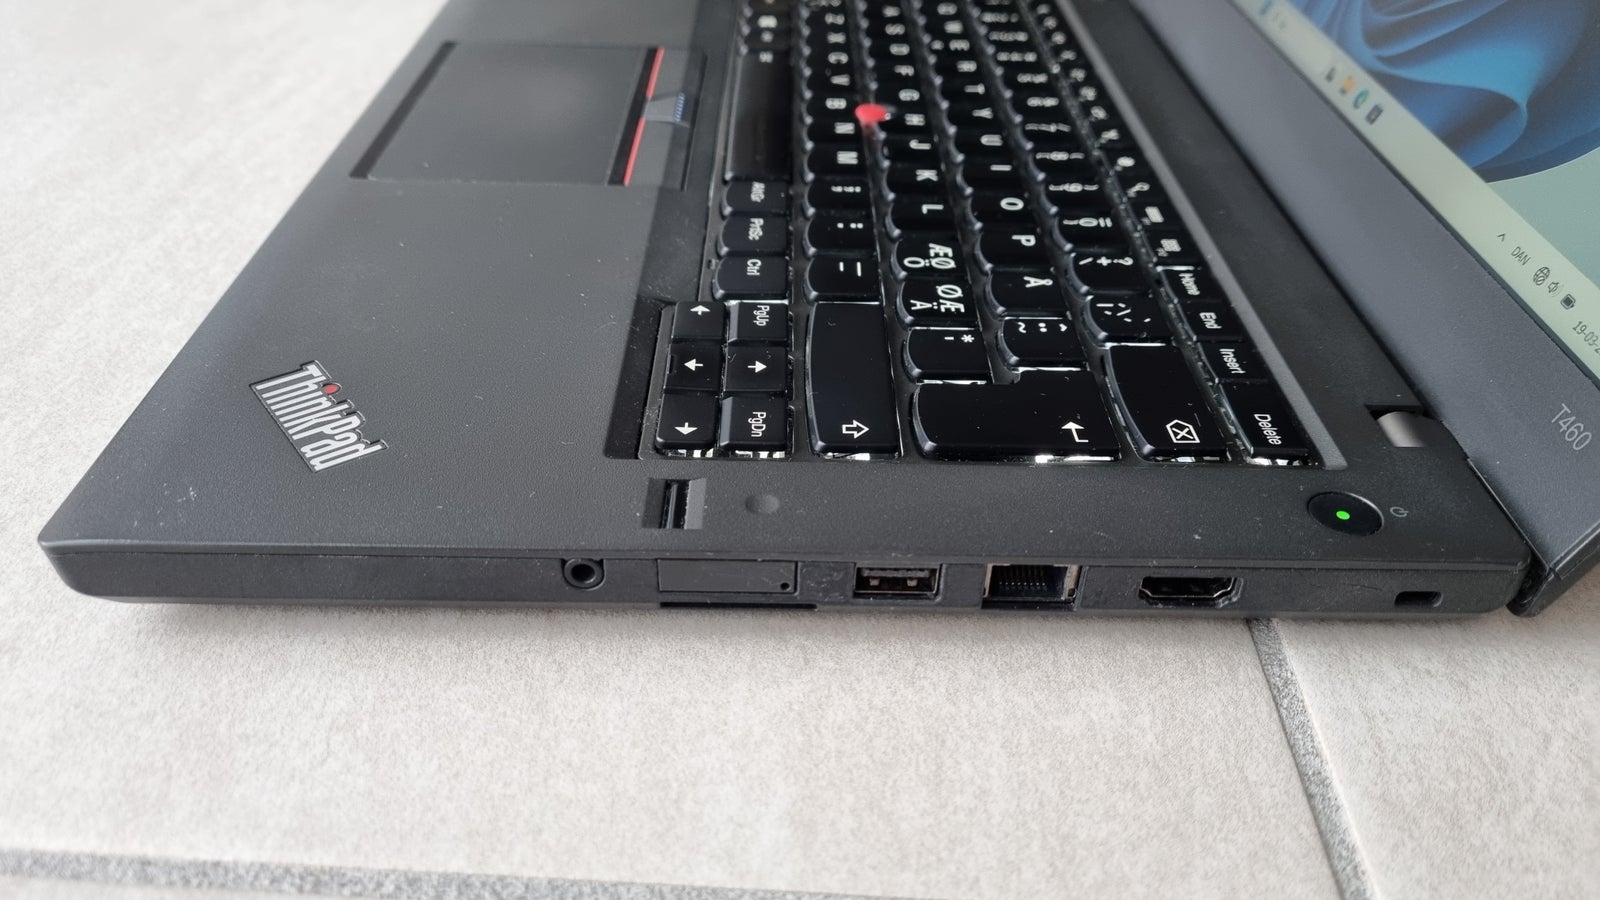 Lenovo T460 ThinkPad, 3,0 GHz, 16 GB ram